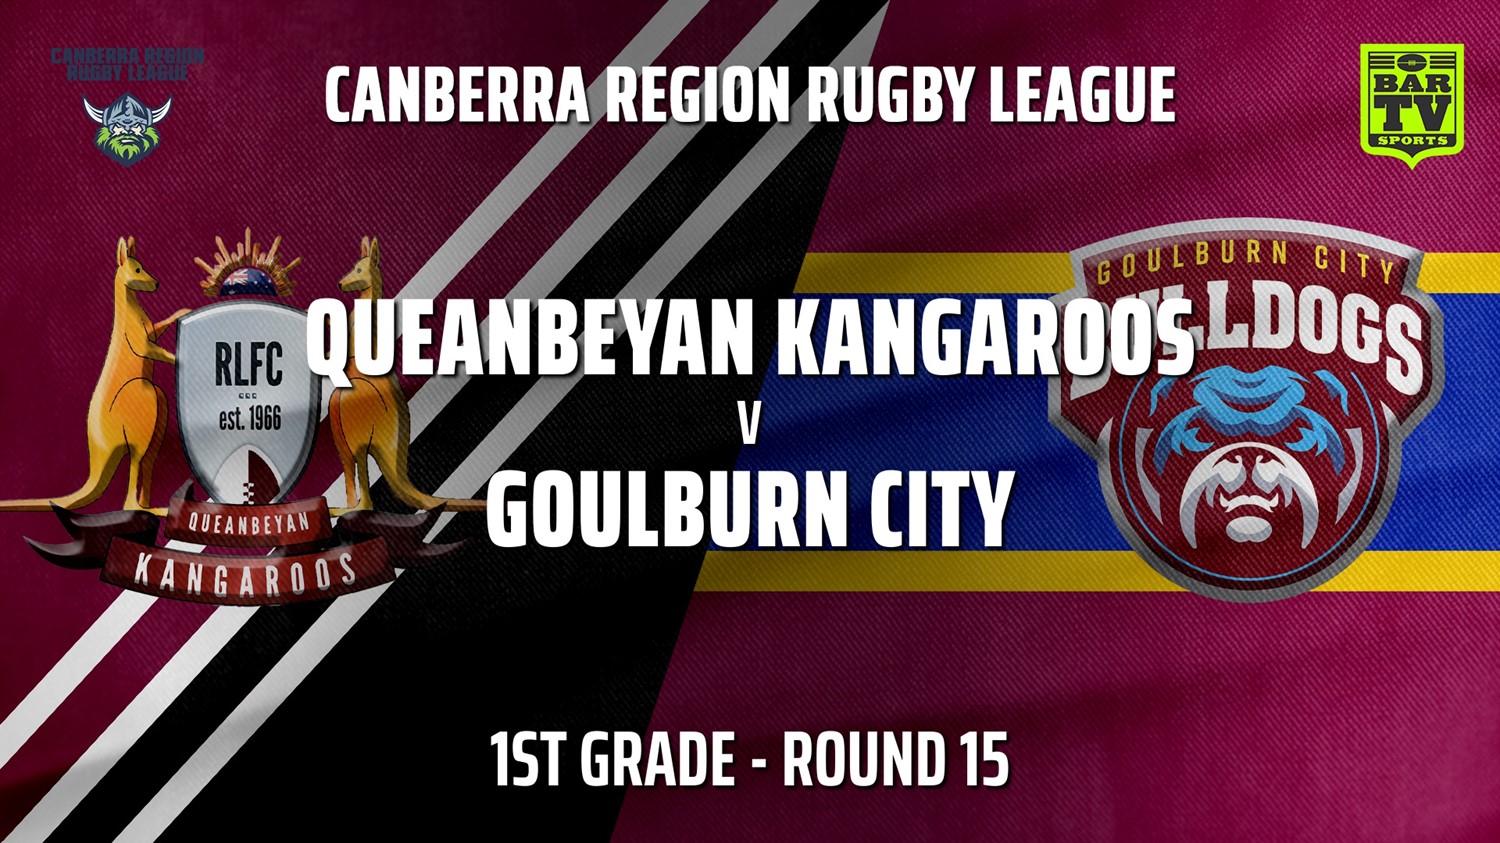 210807-Canberra Round 15 - 1st Grade - Queanbeyan Kangaroos v Goulburn City Bulldogs Slate Image